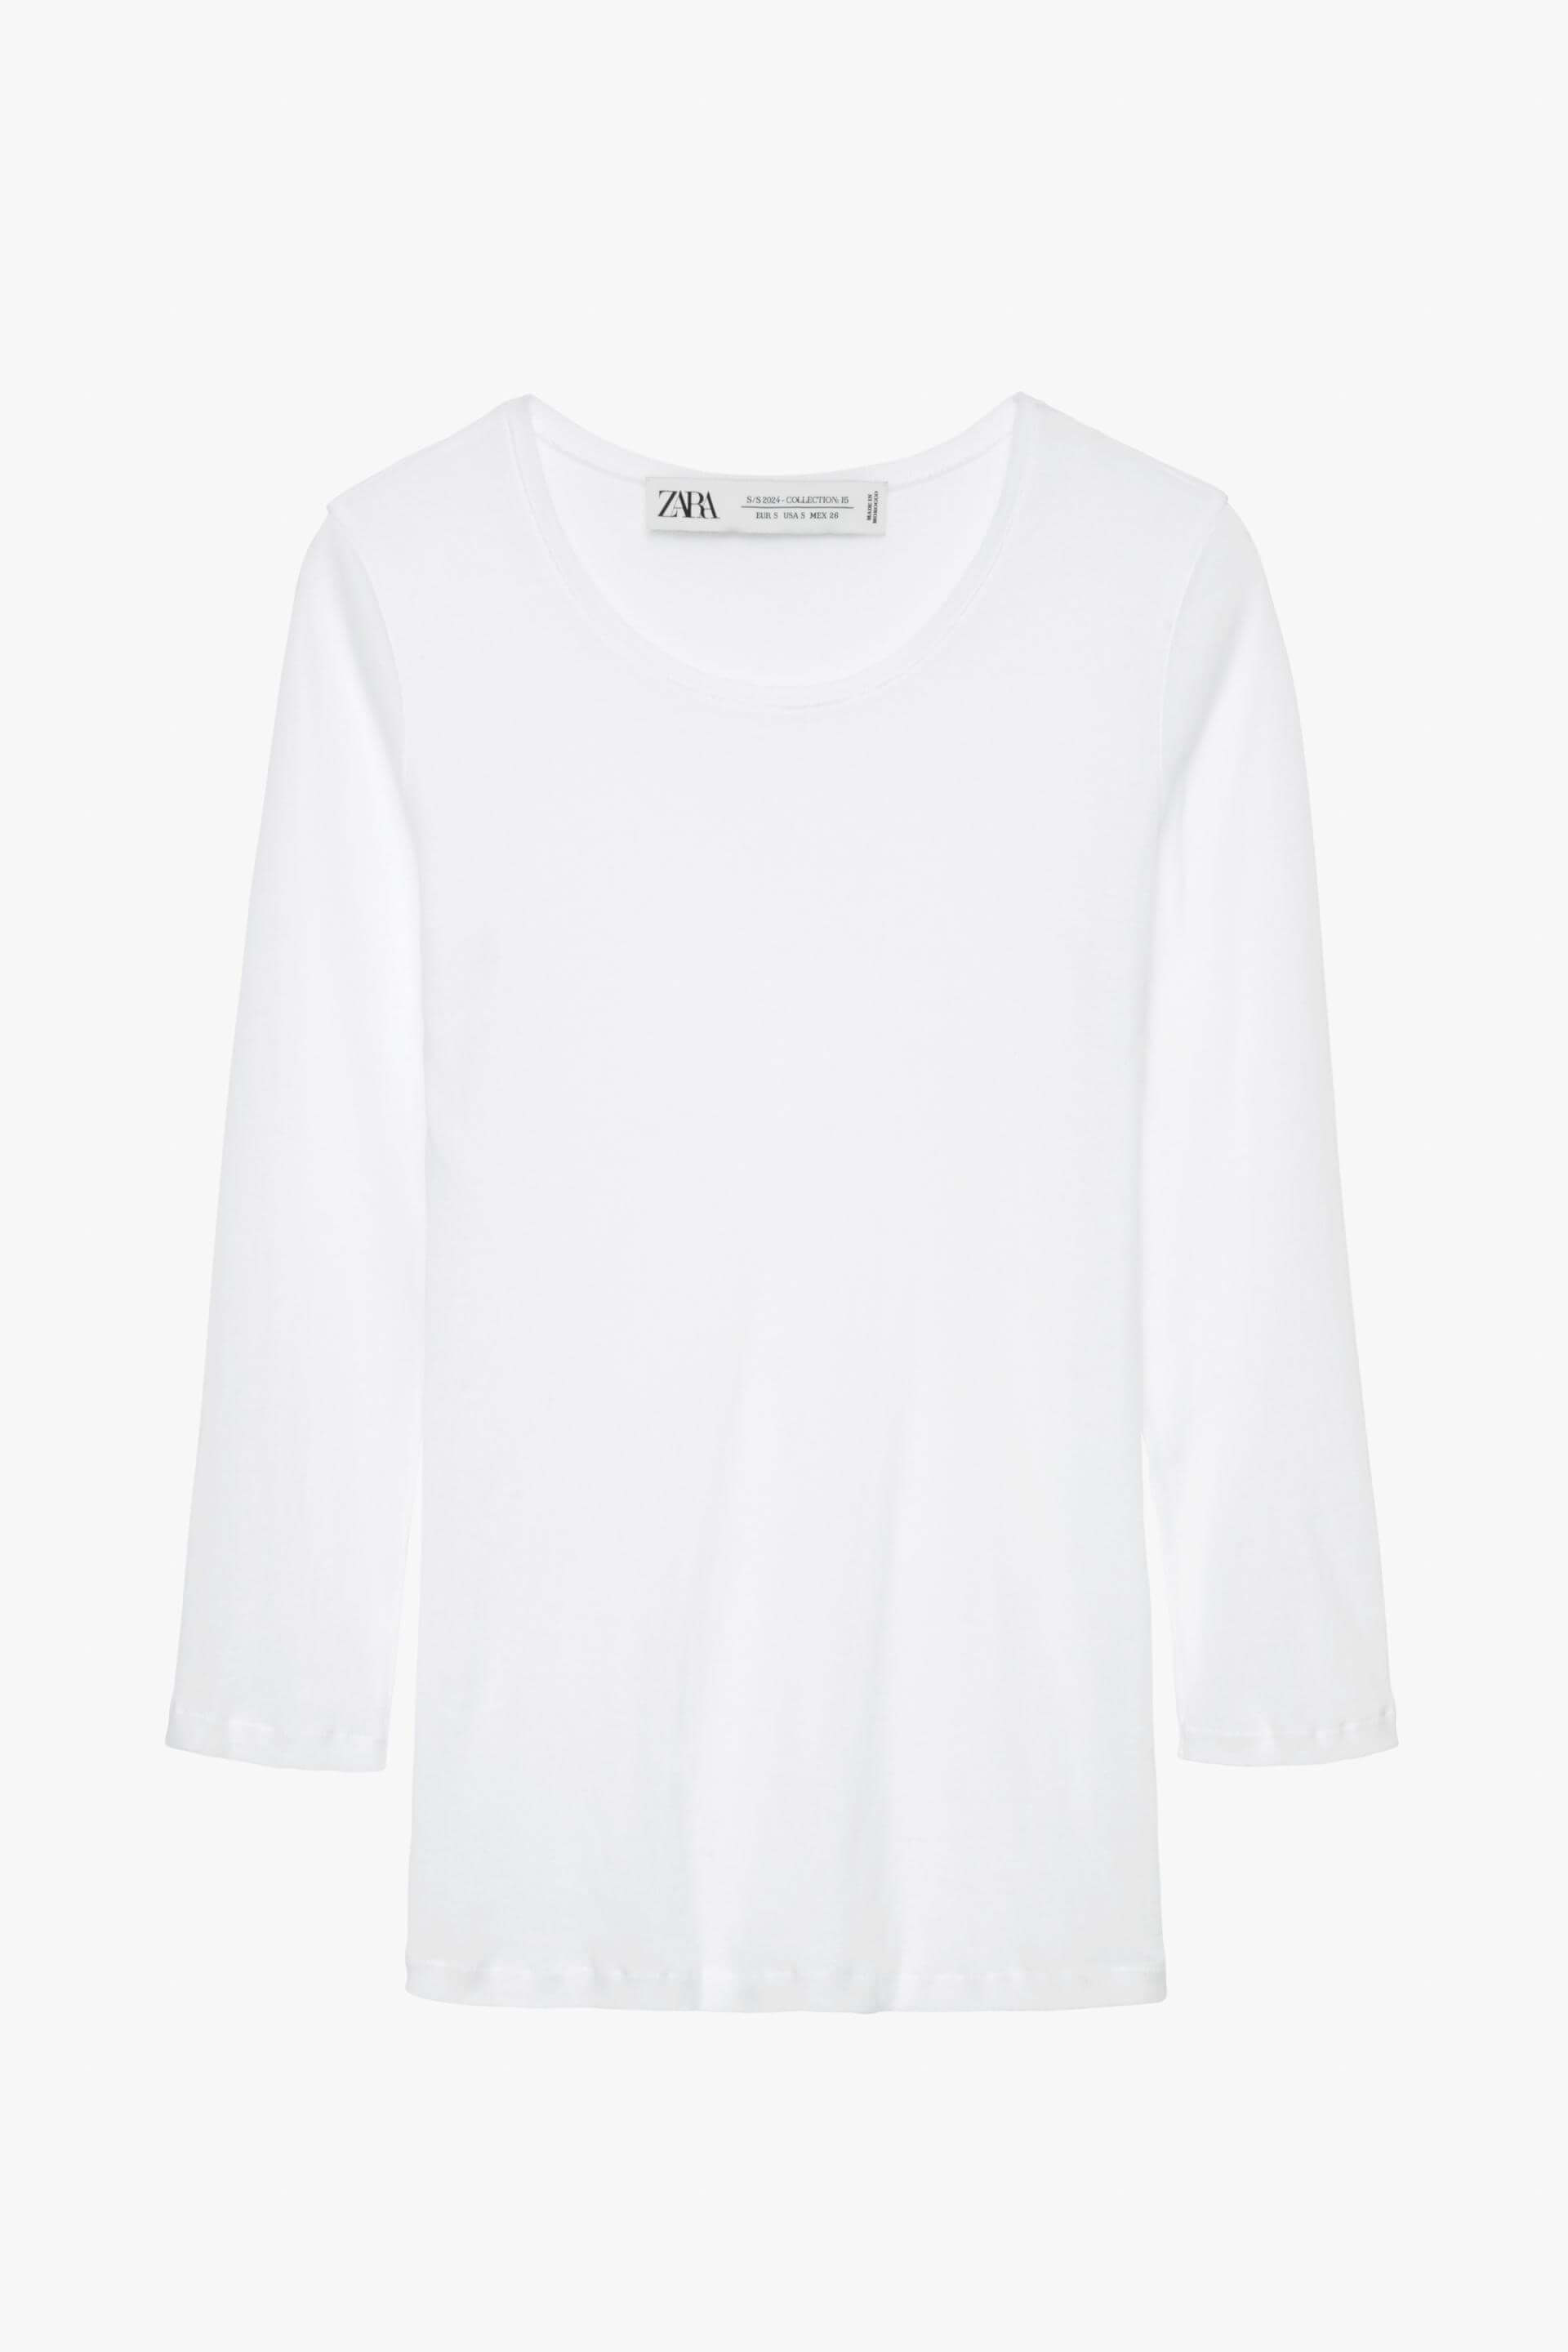 Рубашка Zara Supima Cotton - Limited Edition, белый футболка zara contrast ribbing limited edition белый